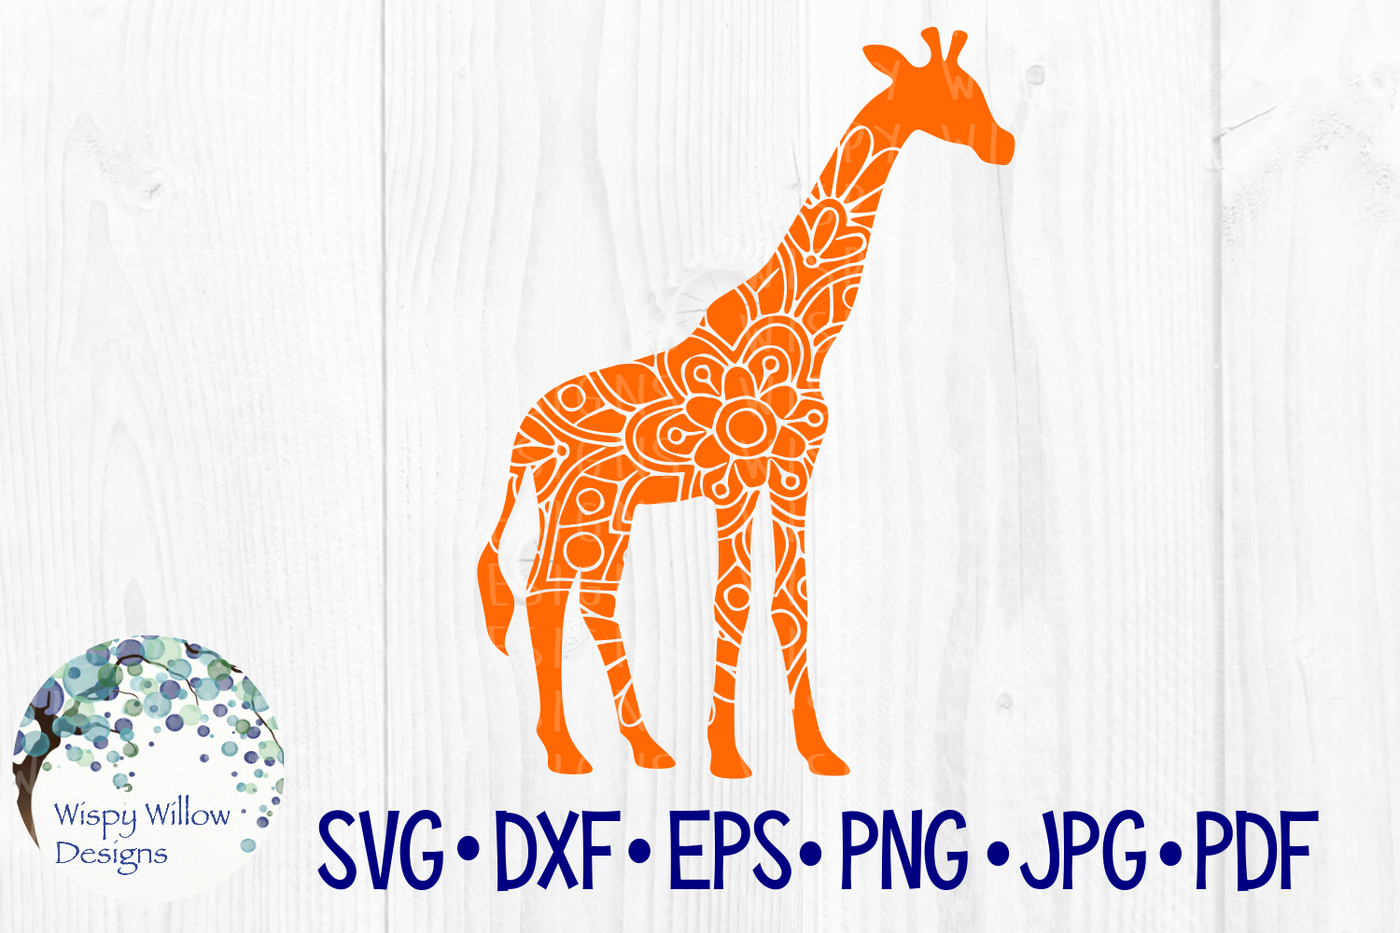 Download Giraffe Mandala Animal Mandala Svg Dxf Eps Png Jpg Pdf By Wispy Willow Designs Thehungryjpeg Com